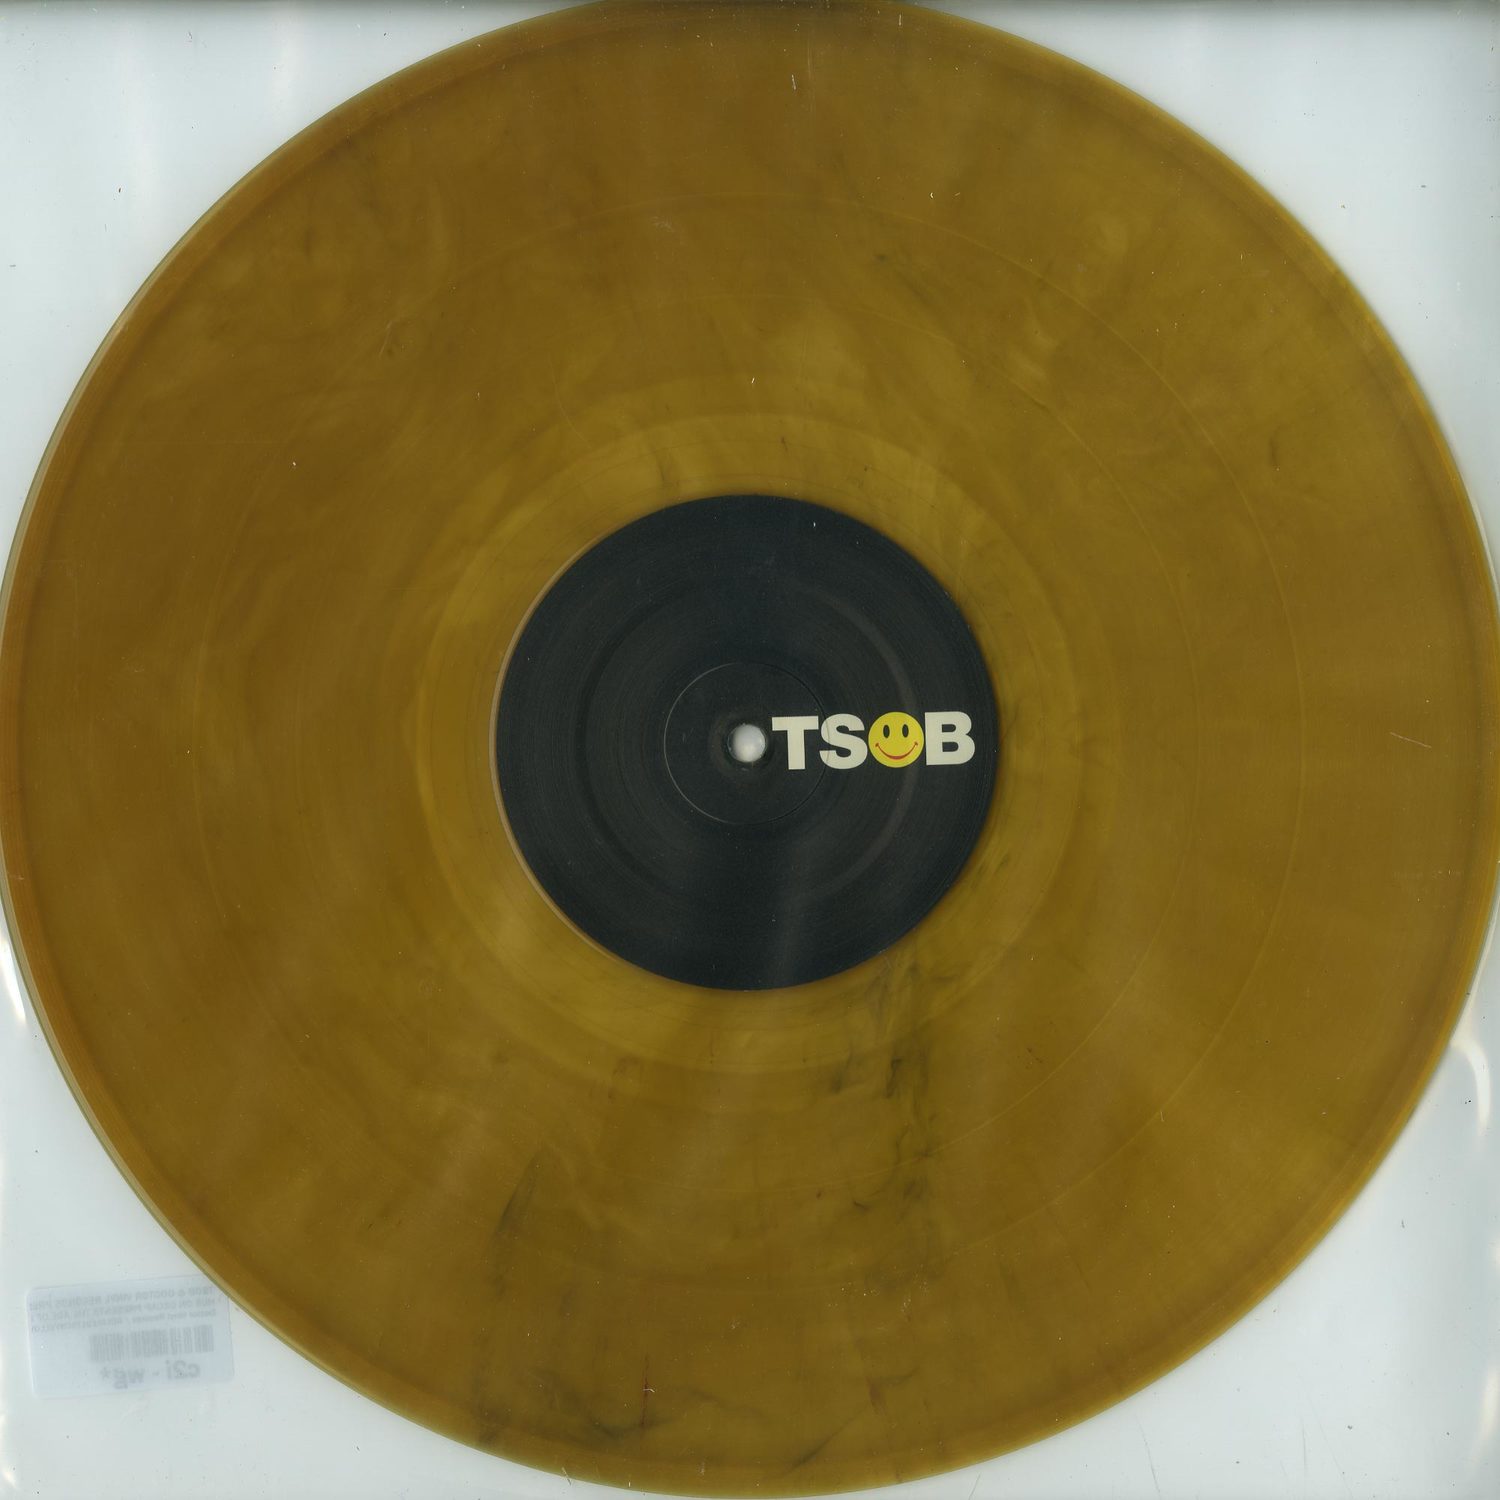 Tsob & Doctor Vinyl Records Present - HUS ON DECAP PRESENTS THE AGE OF LOVE 